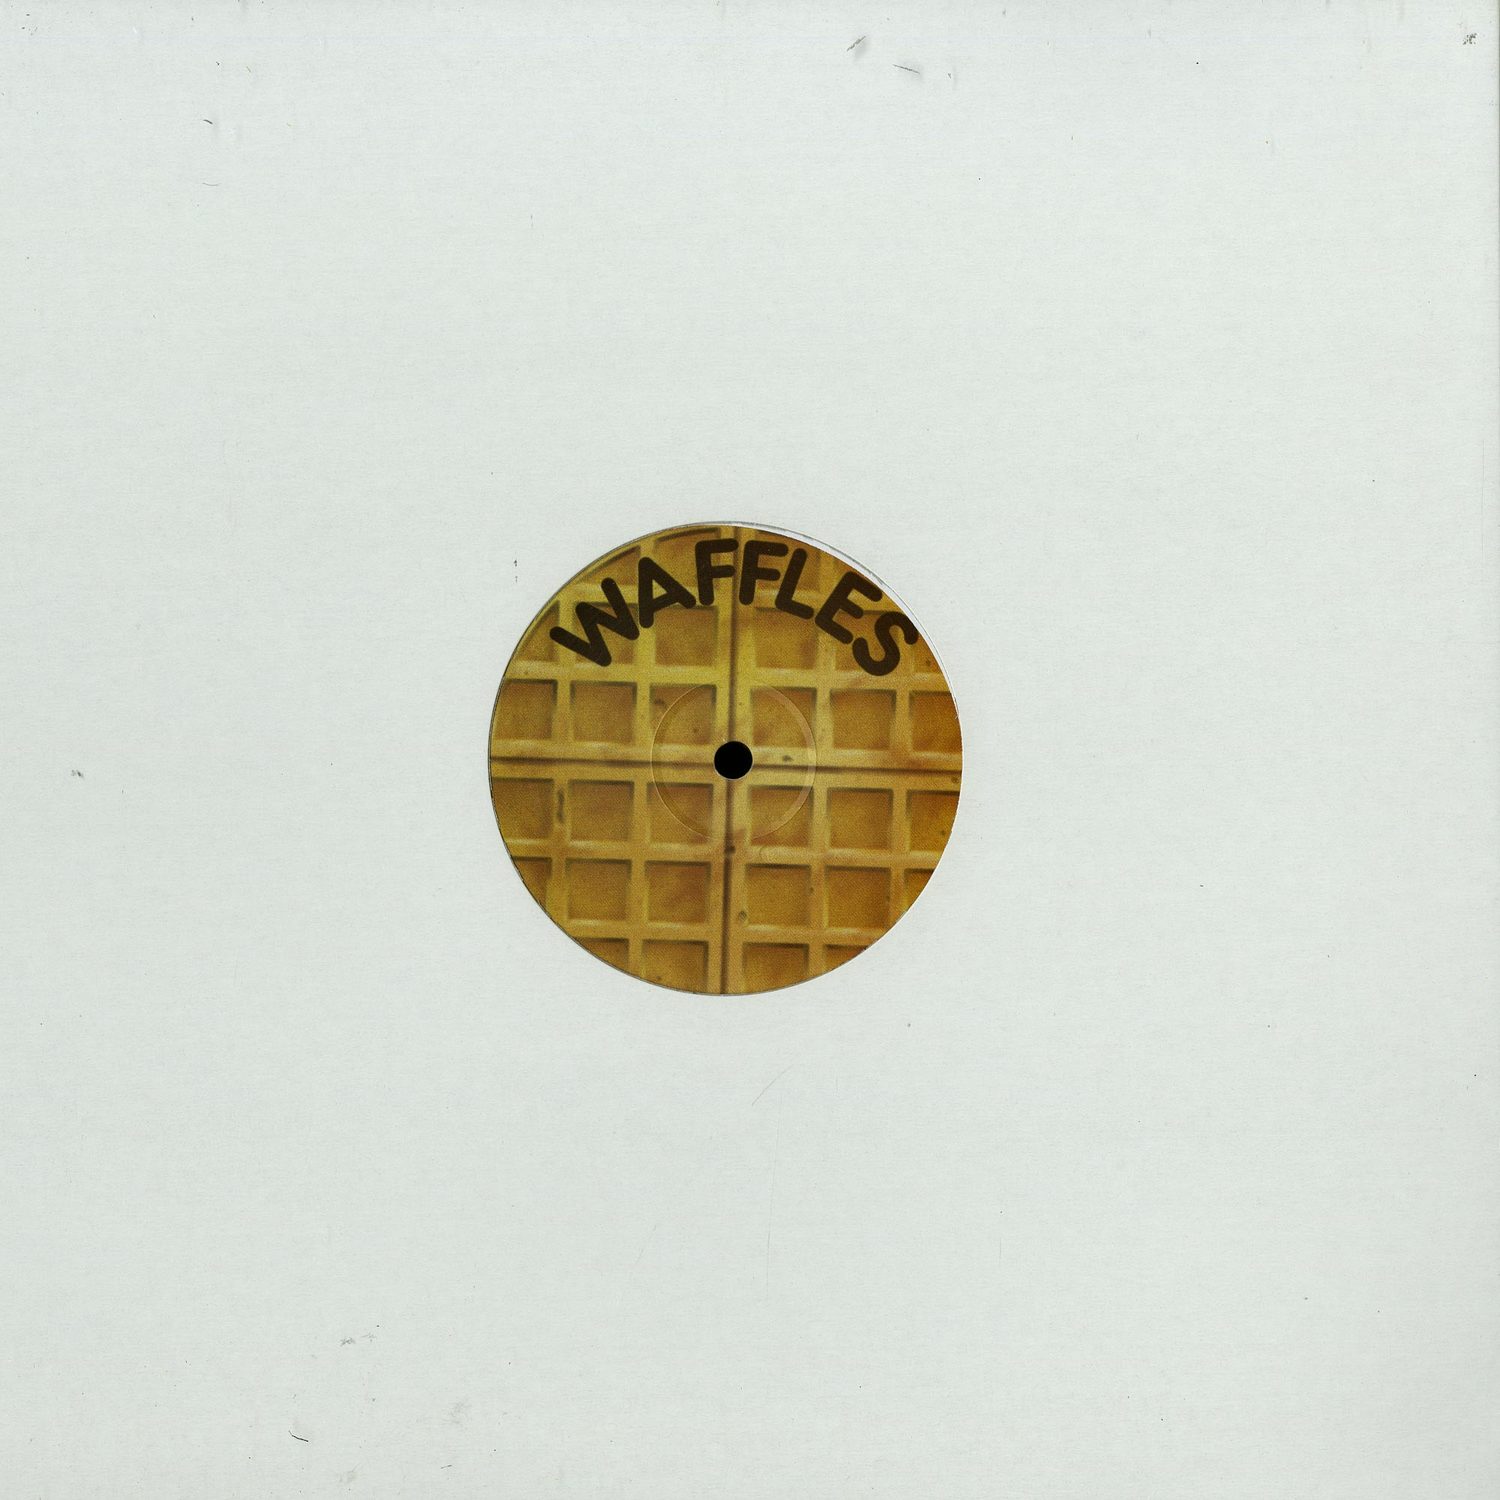 Waffles - WAFFLES 001